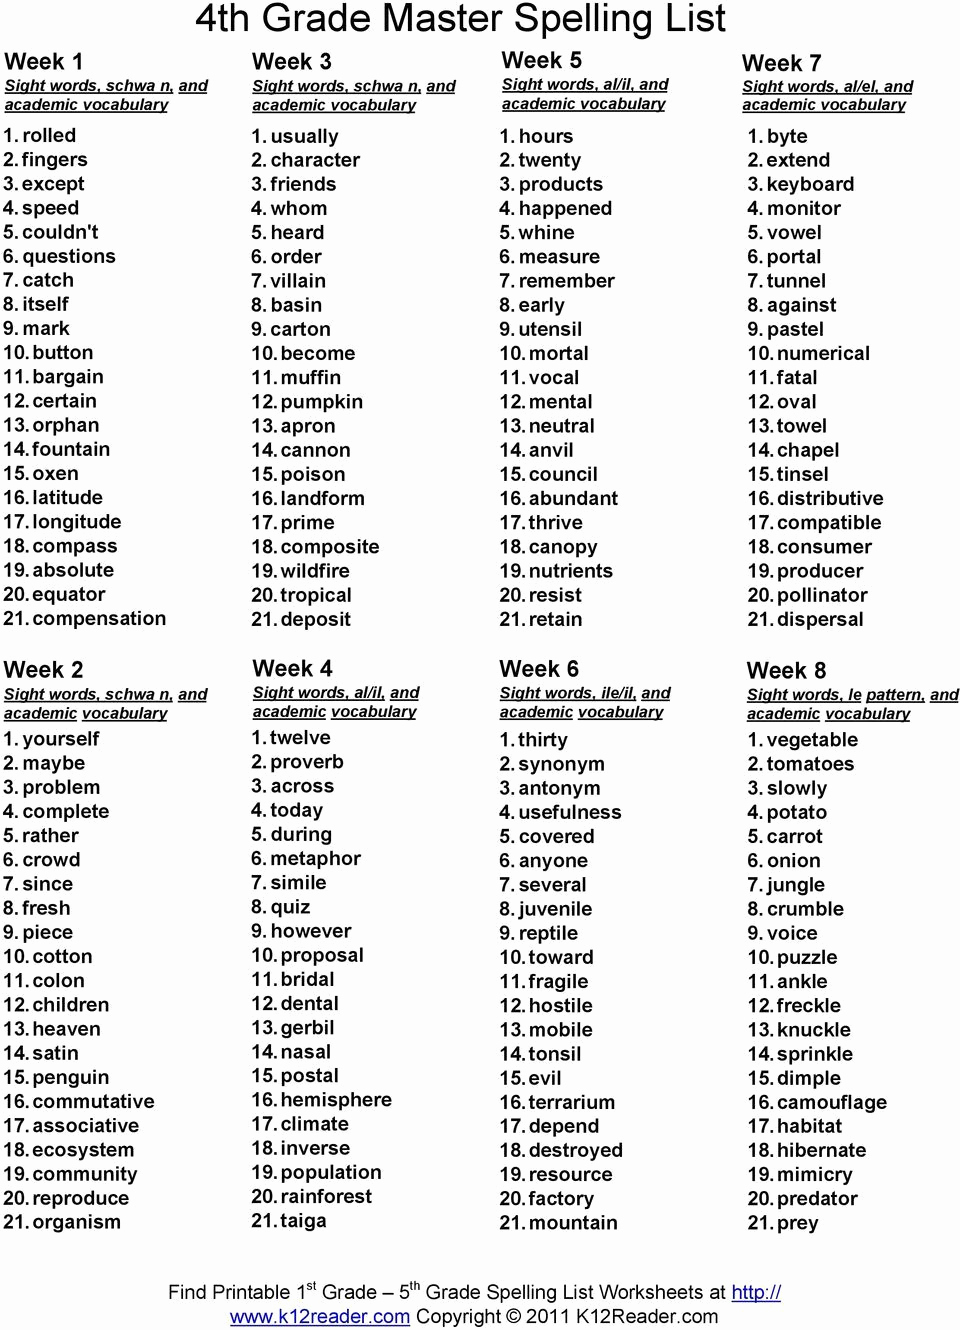 4th Grade Vocabulary Worksheets Pdf Luxury 13 Worksheets 3rd Grade Spelling Words List 11 36